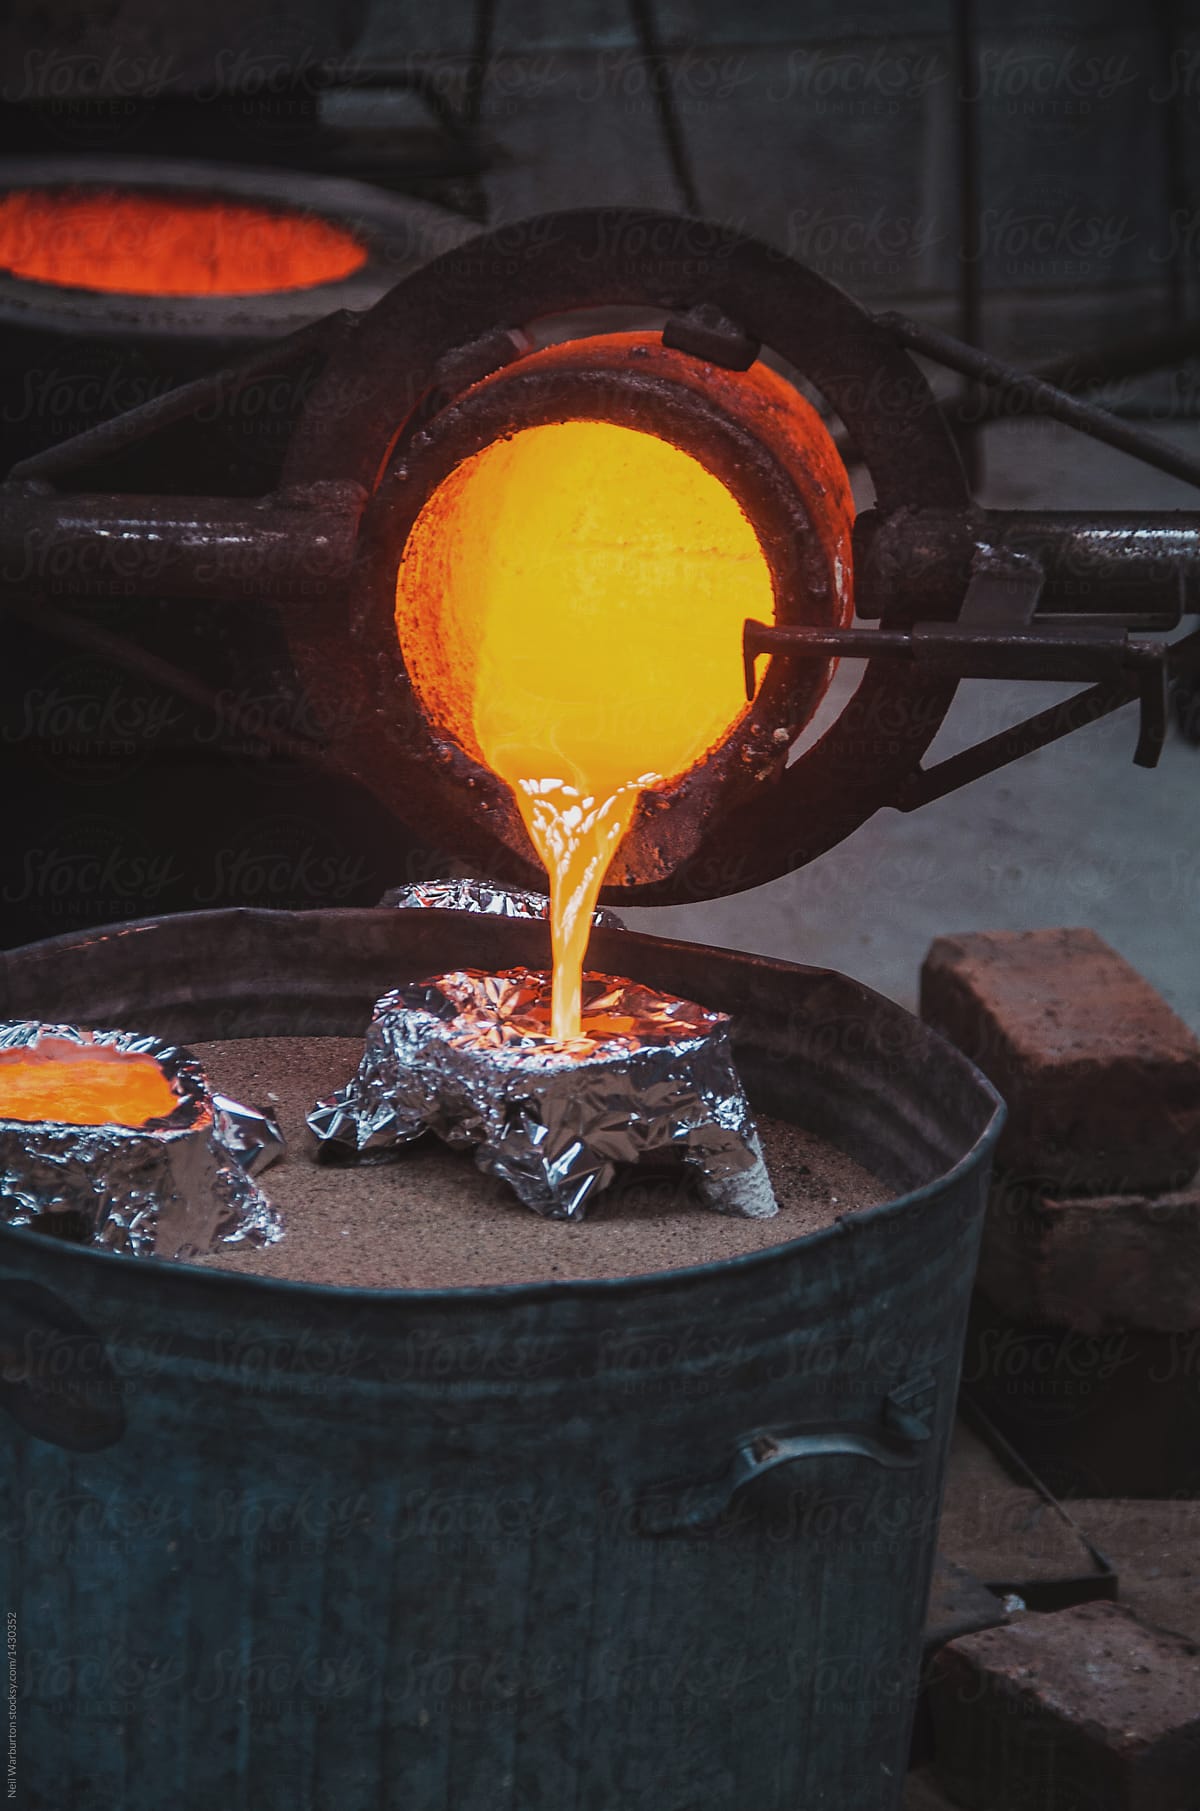 Pouring Molten Bronze Into Shell" by Stocksy Contributor "Neil Warburton" - Stocksy